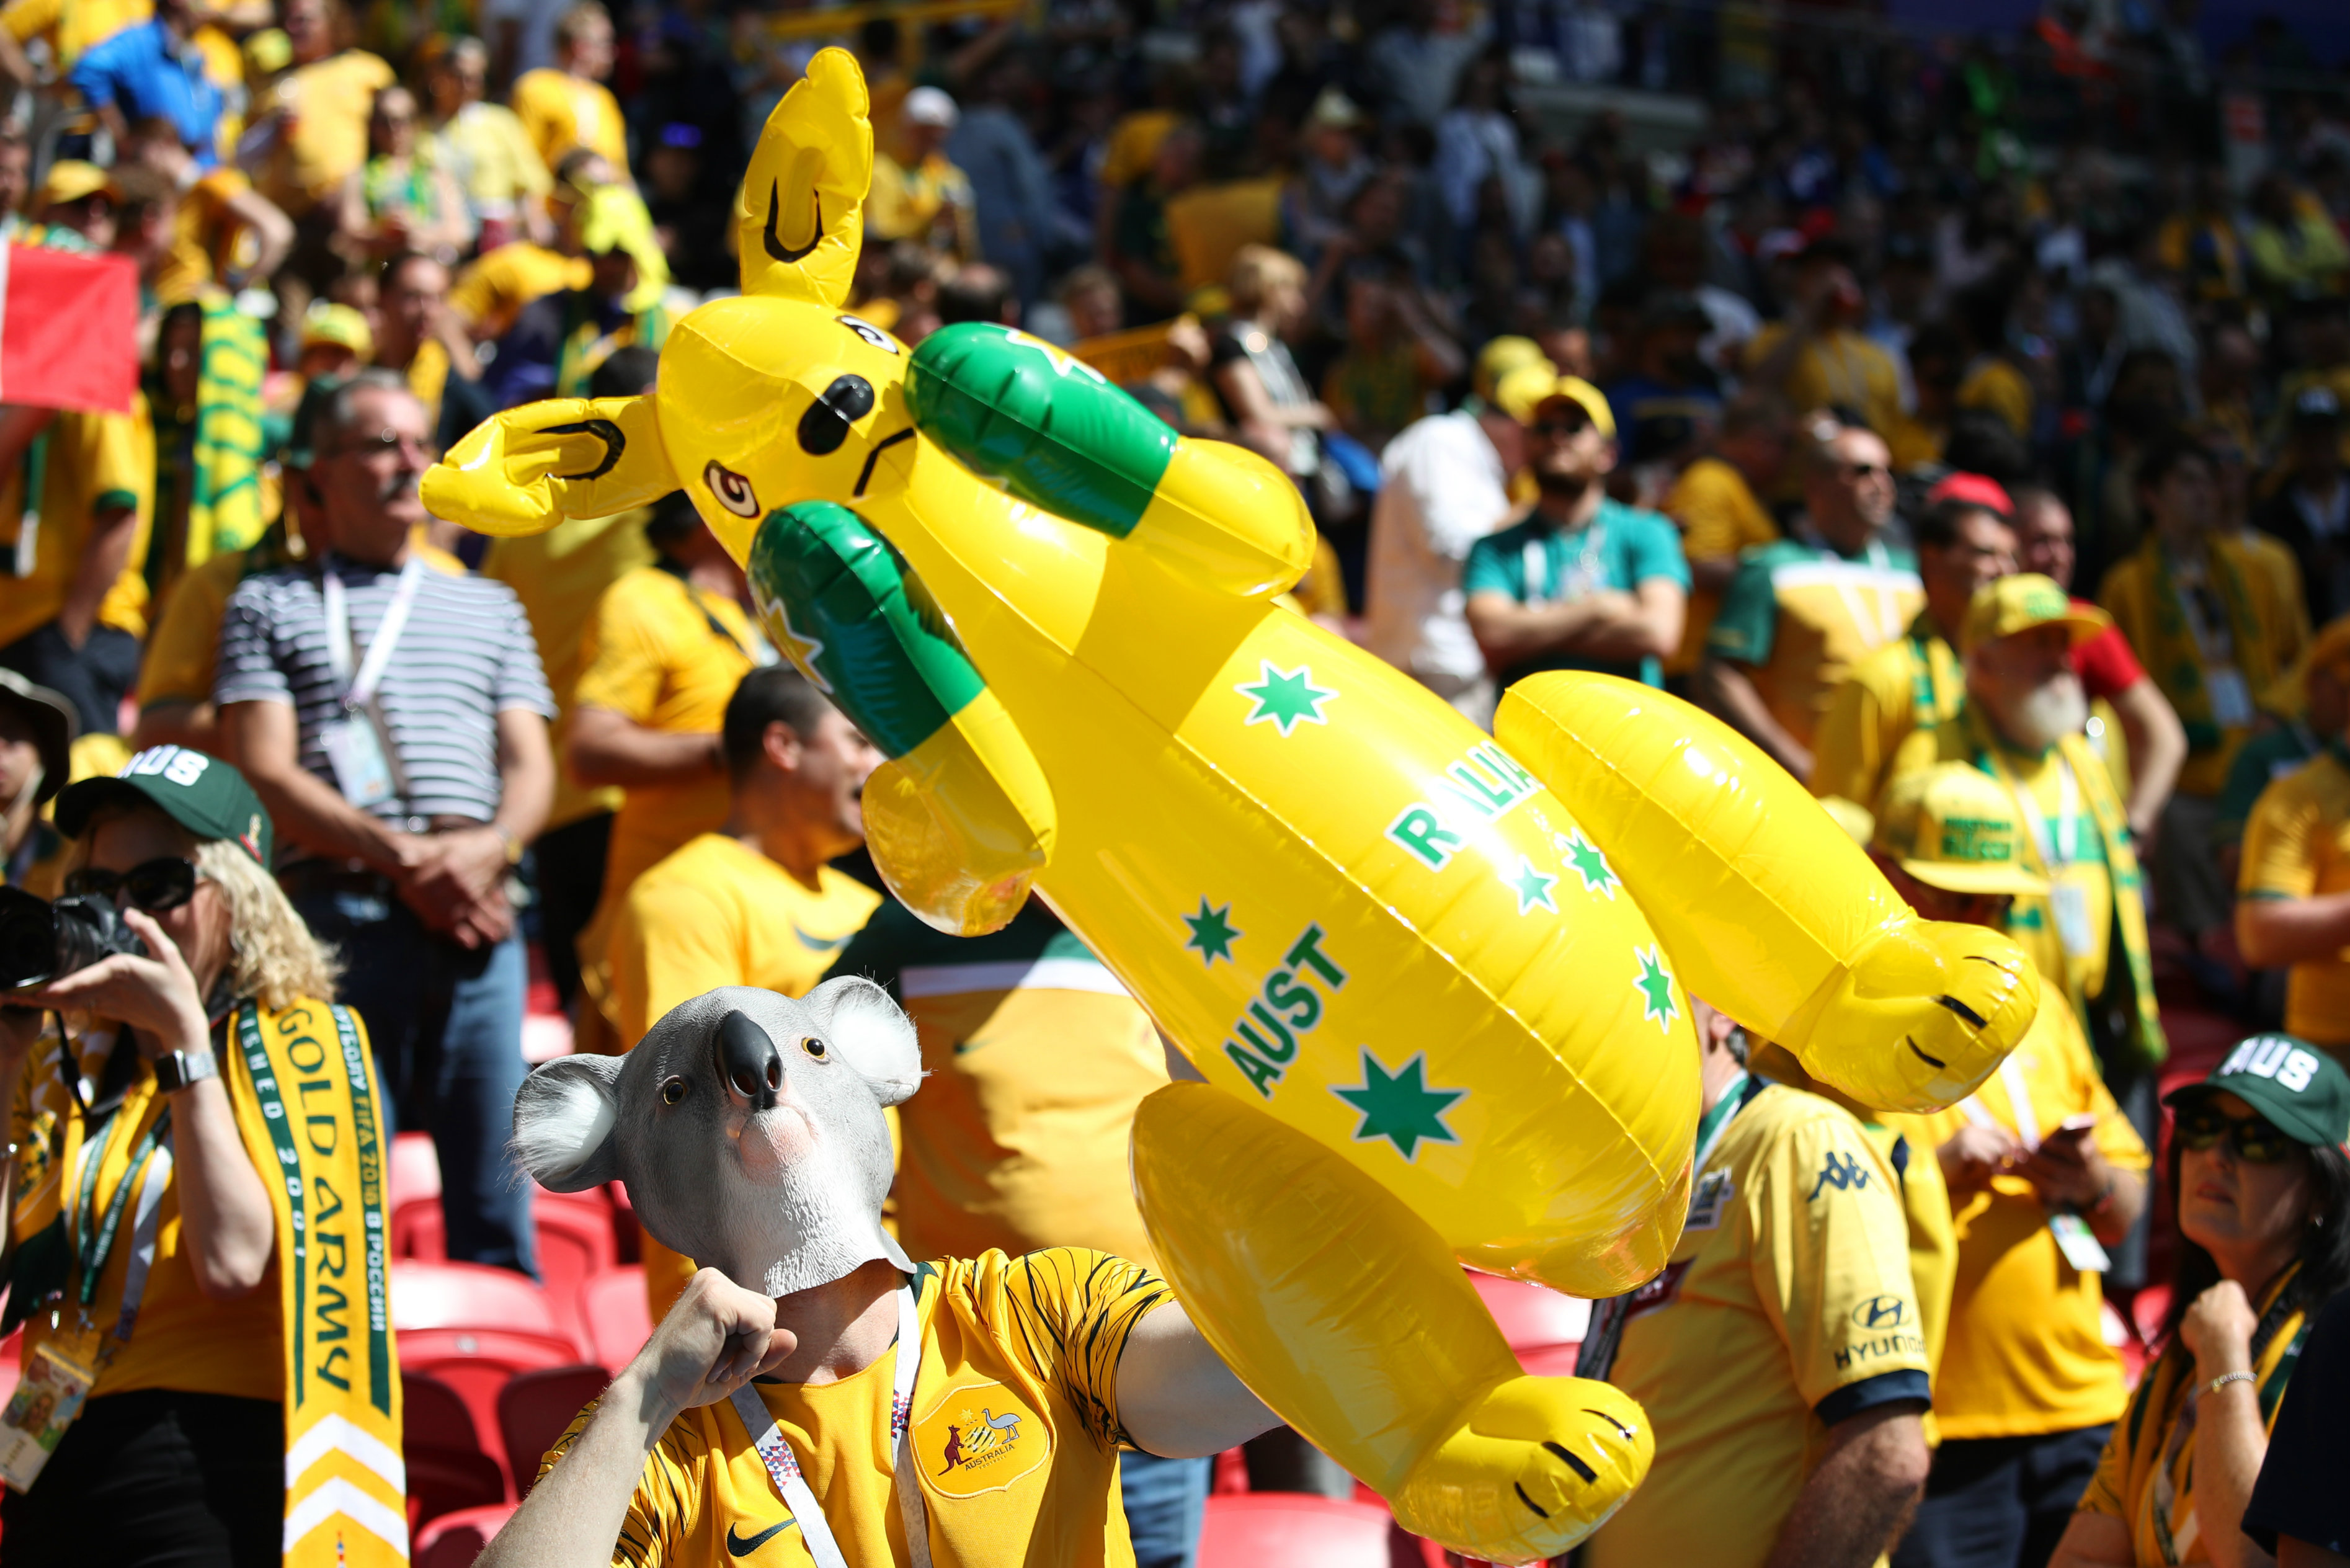 Socceroos fans